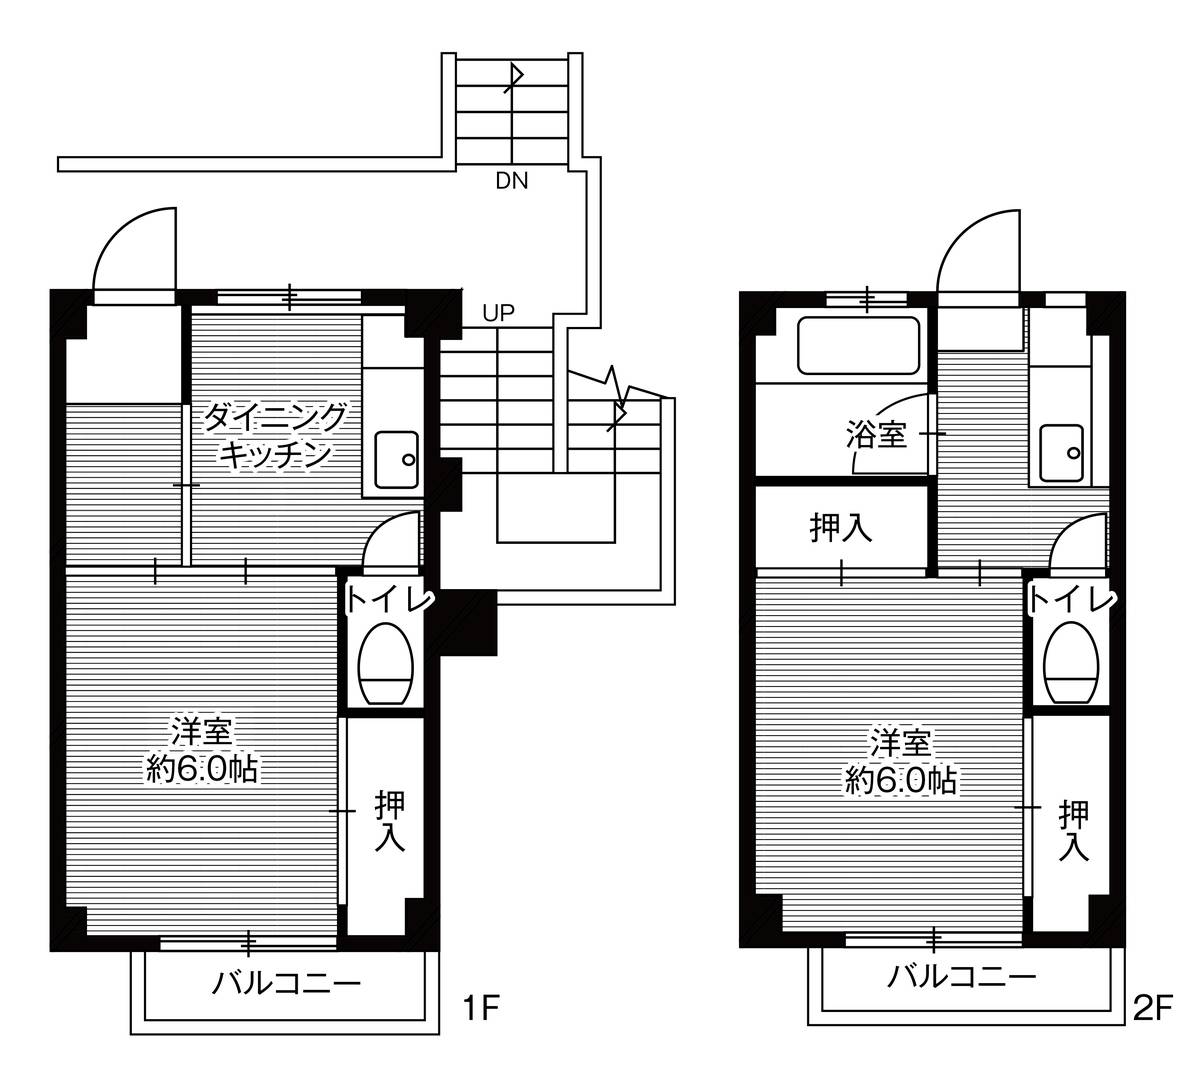 2DK floorplan of Village House Yuyama in Takahama-shi